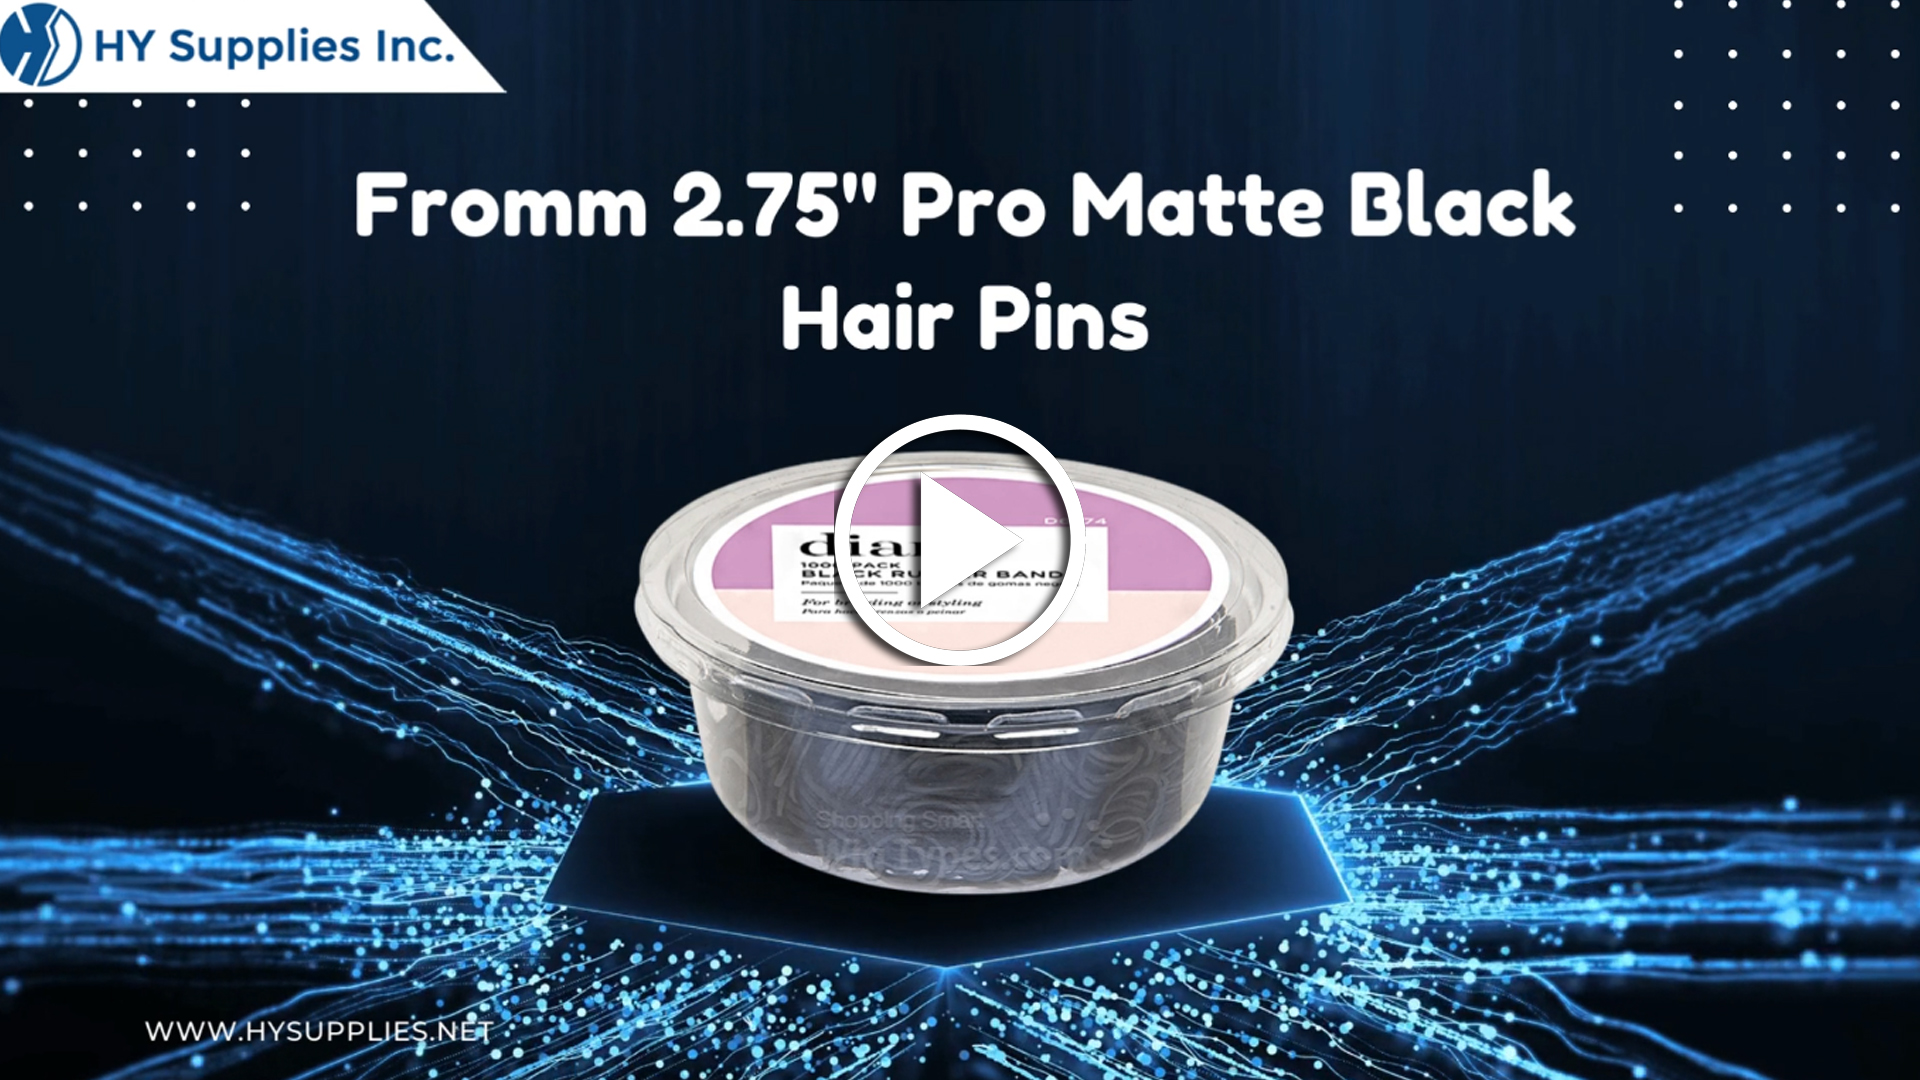 Fromm 2.75" Pro Matte Black Hair Pins